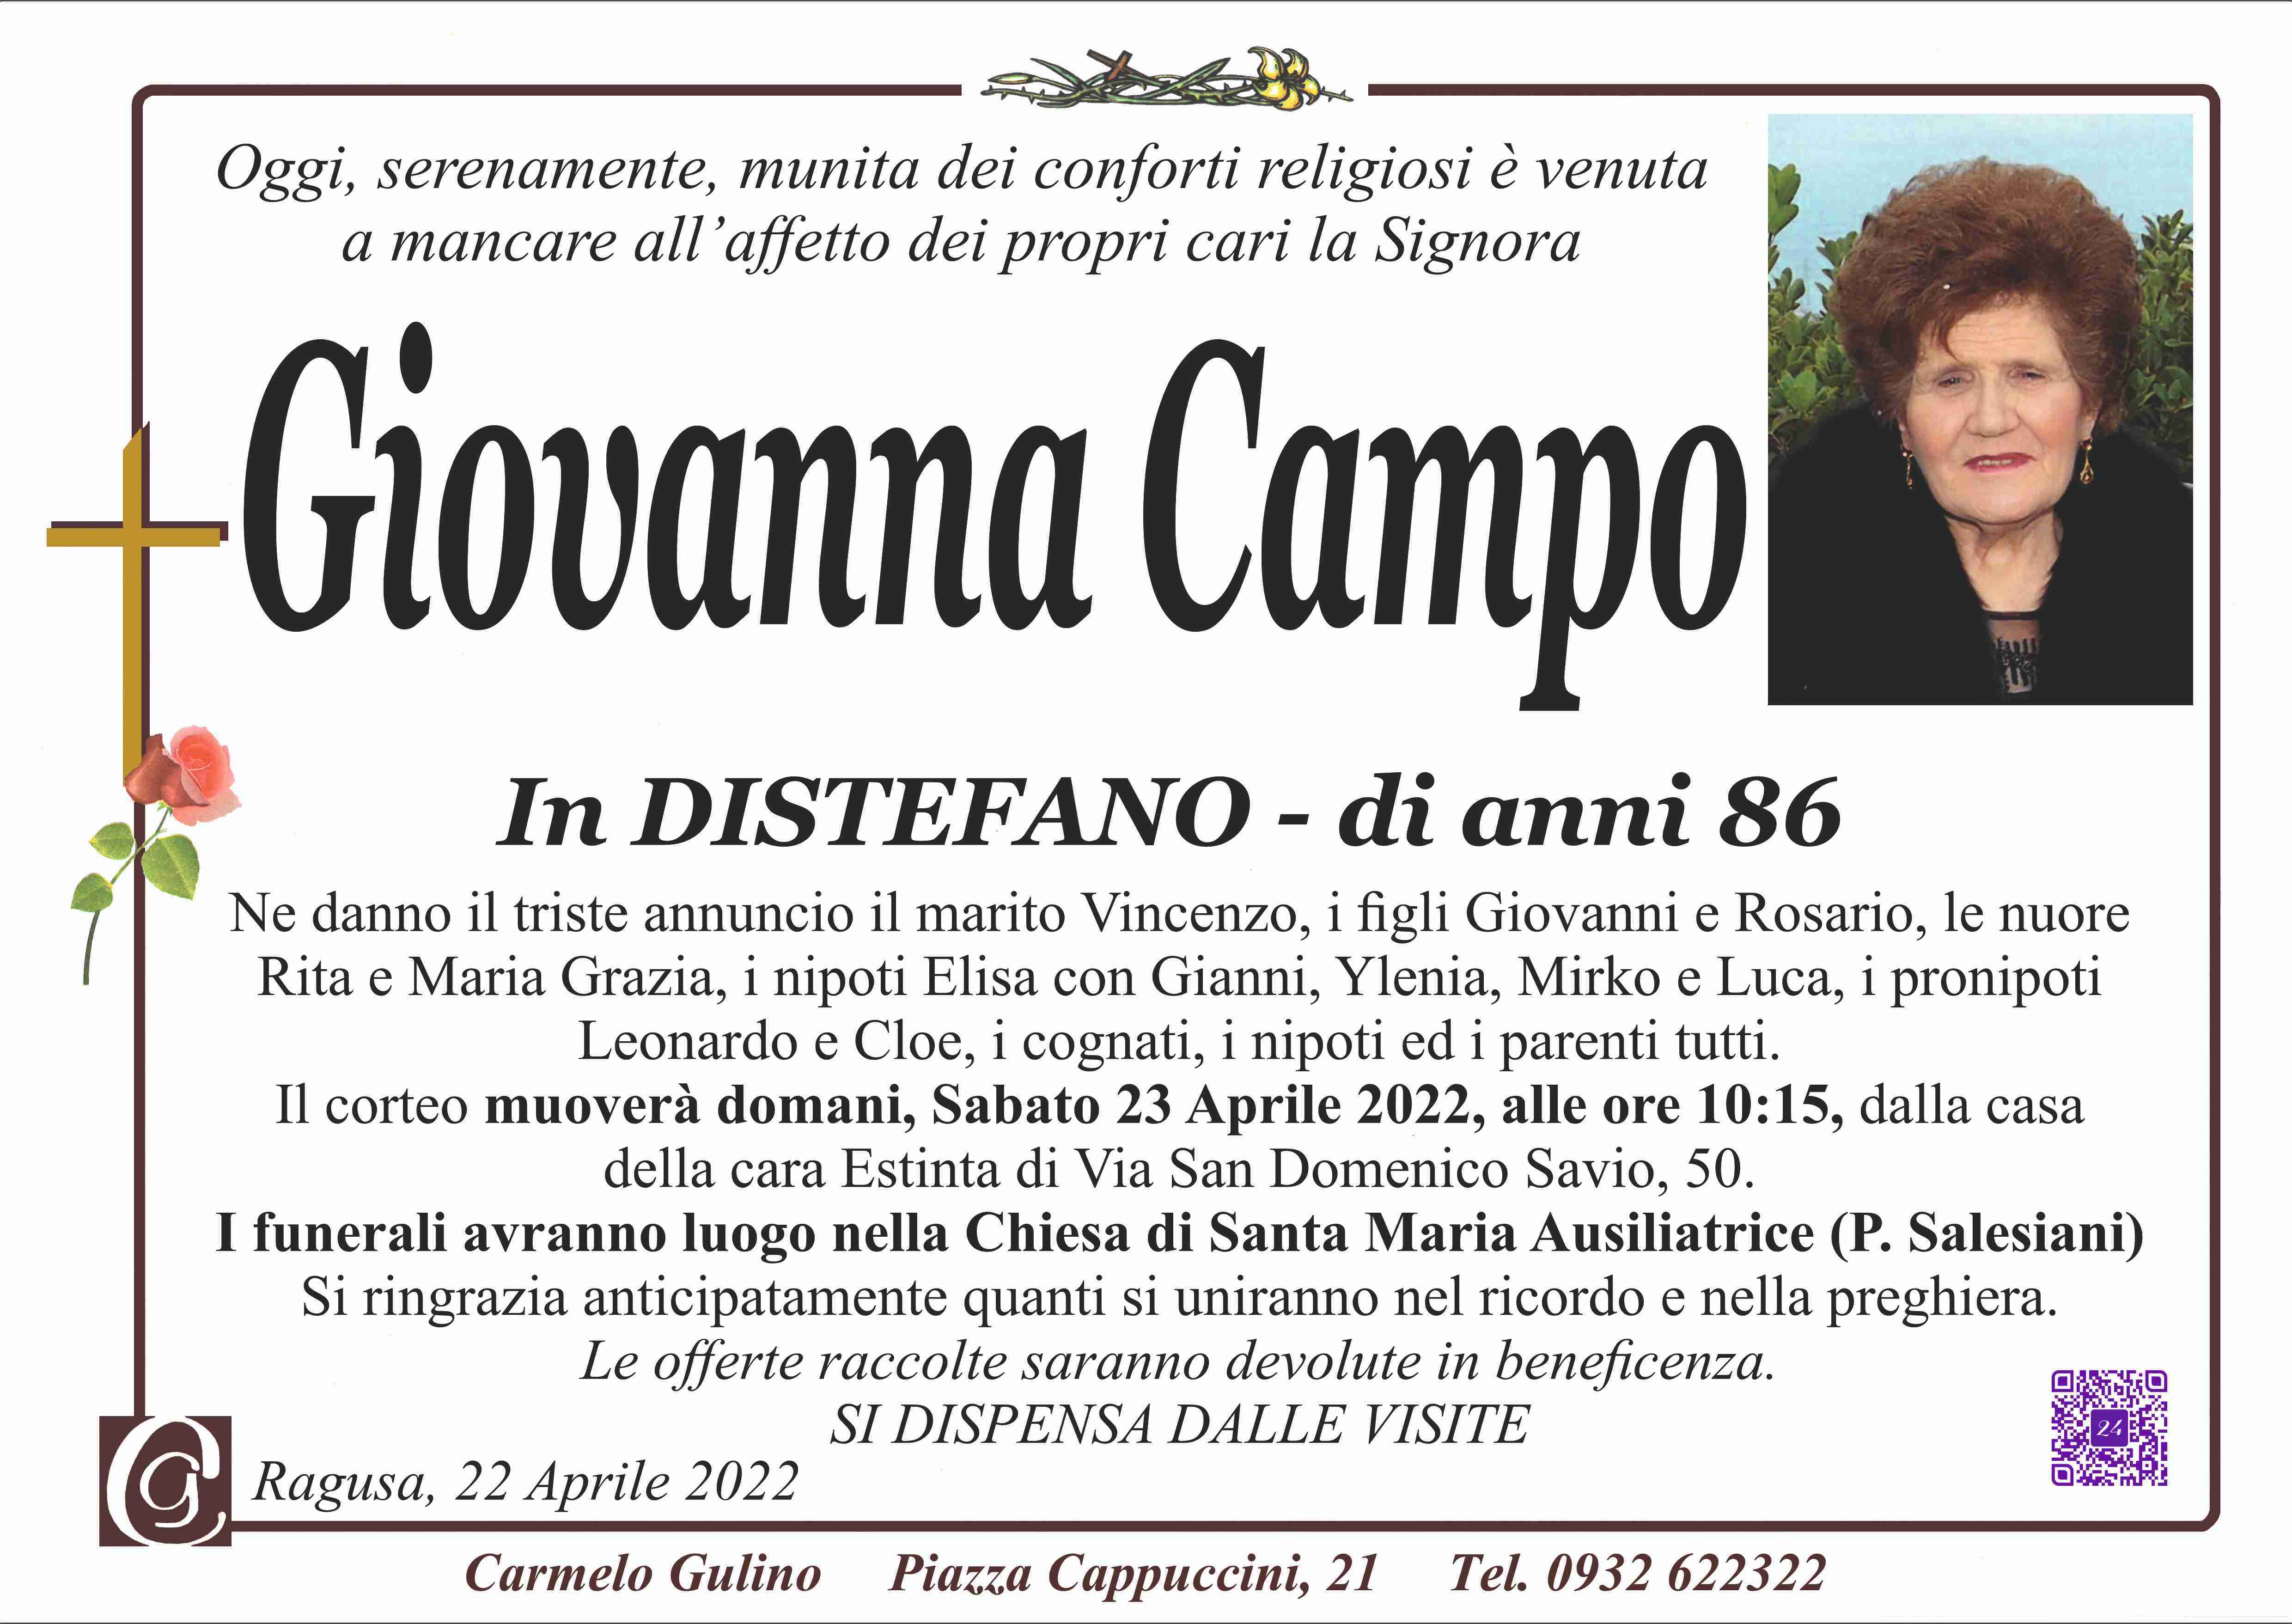 Giovanna Campo